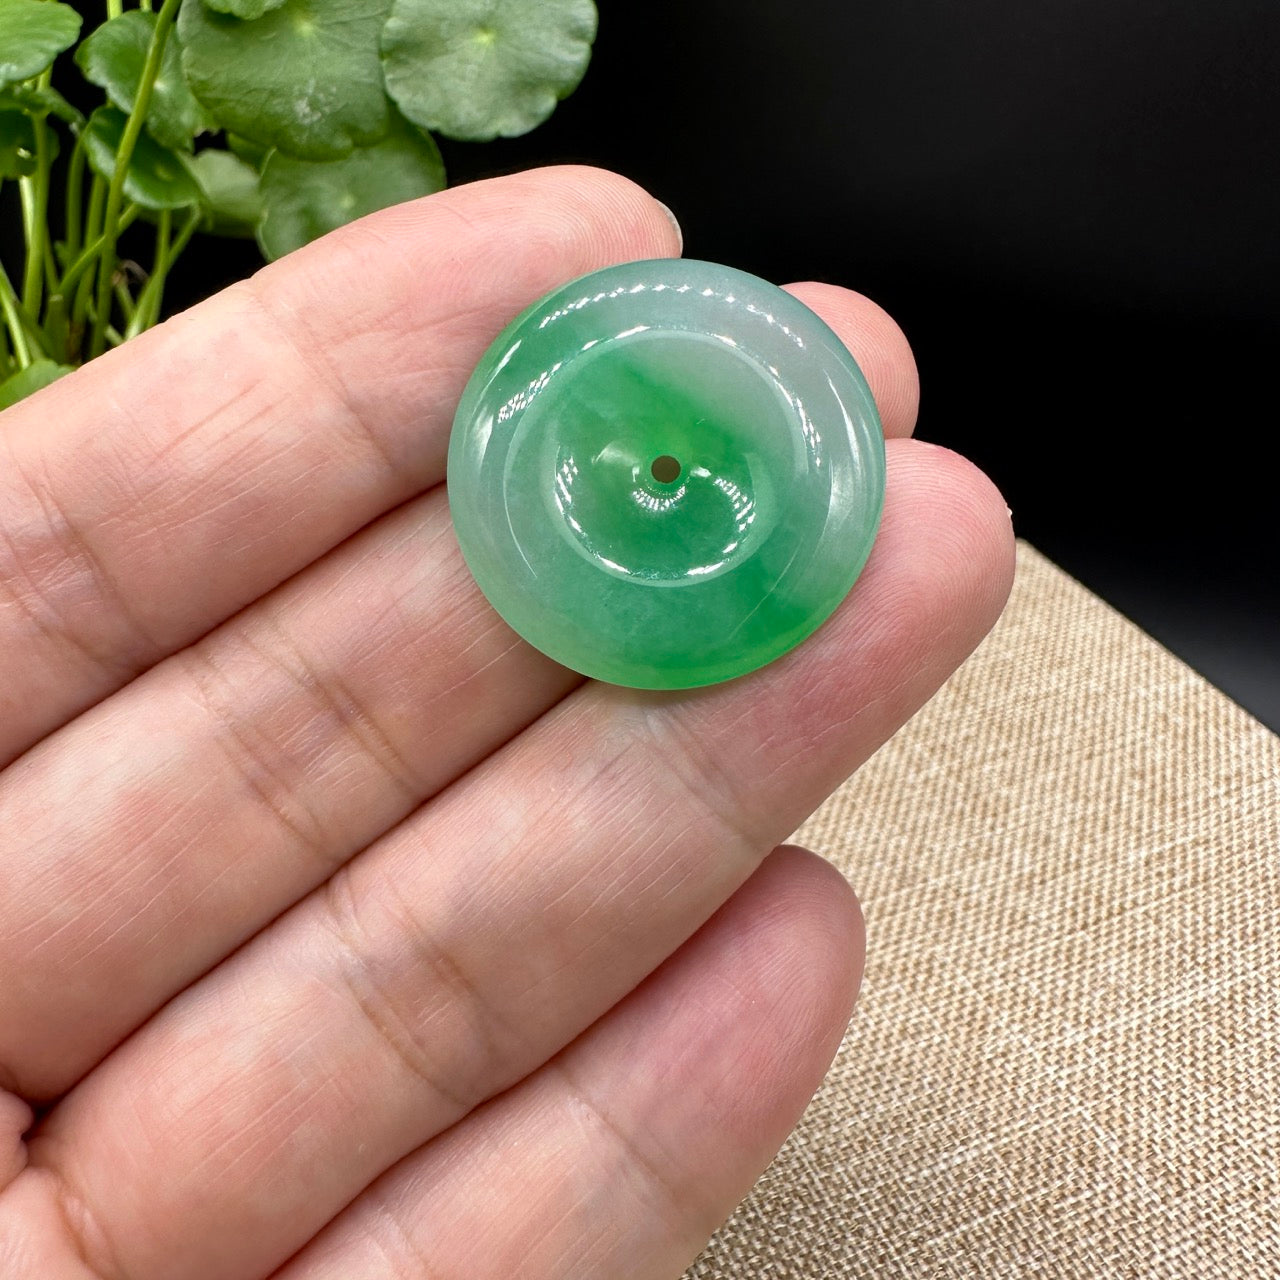 RealJade® "Good Luck Button" Necklace Ice green Jadeite Jade Lucky Ping An Kou Pendant